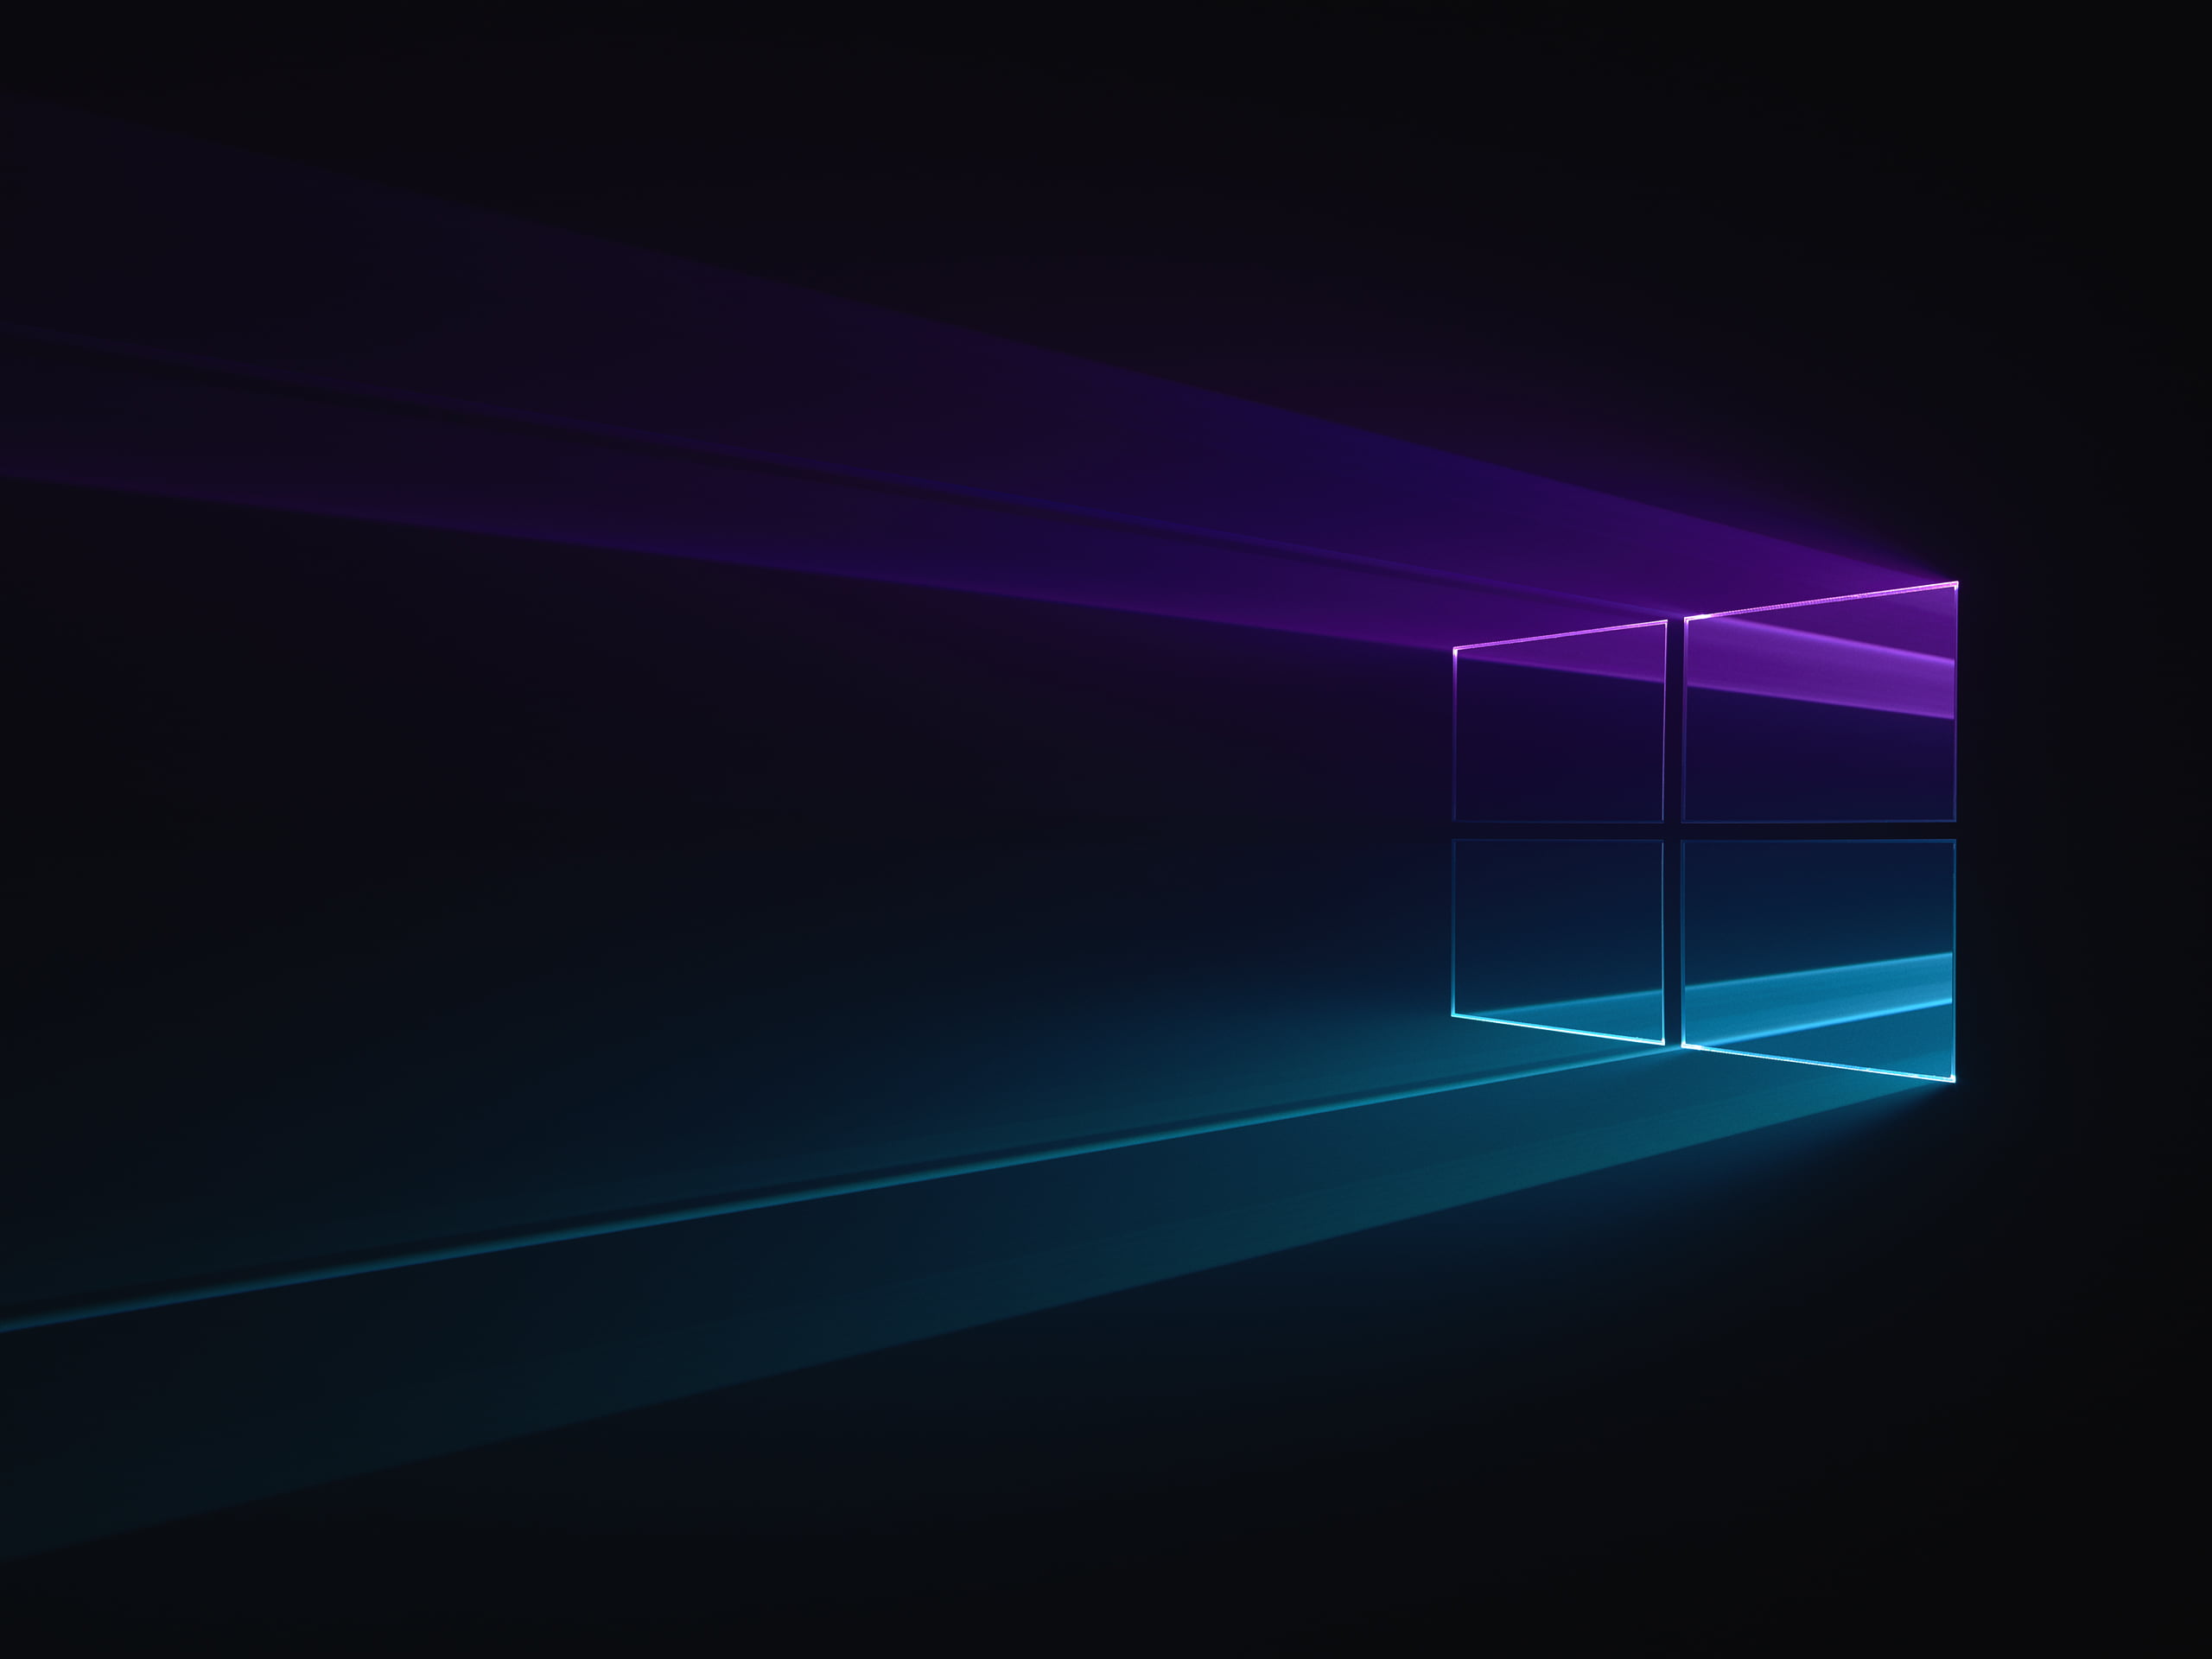 Free download | HD wallpaper: Windows 10, purple, blue, black ...